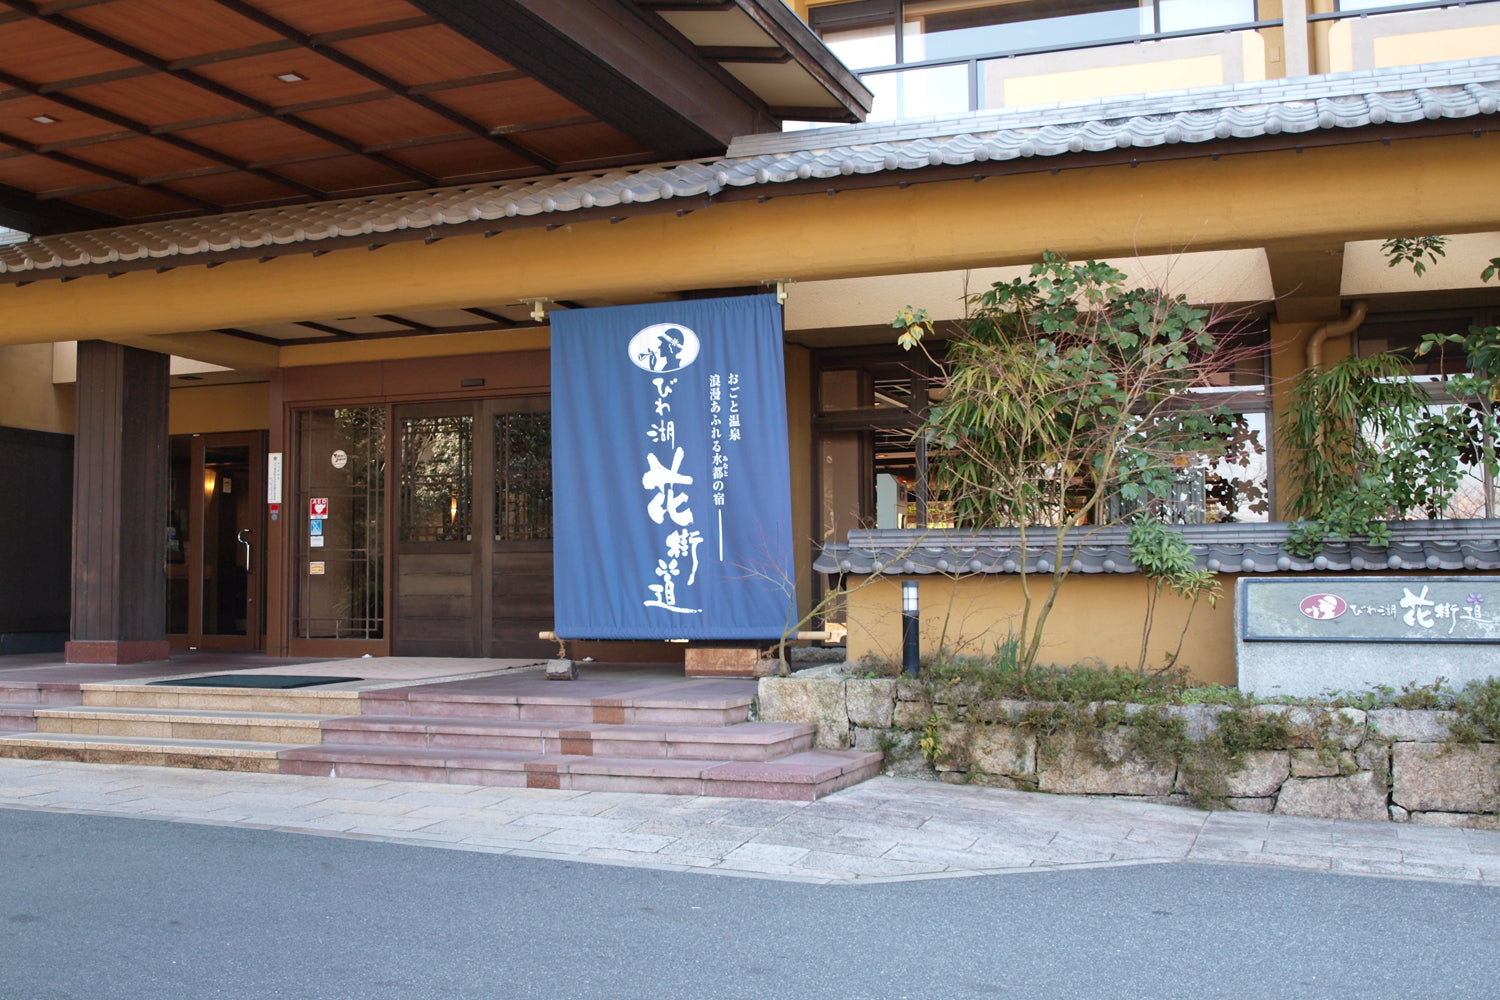 Hanakaido: Ryokan(Japanese Style Hotel) in Ogoto hot Spring, Shiga